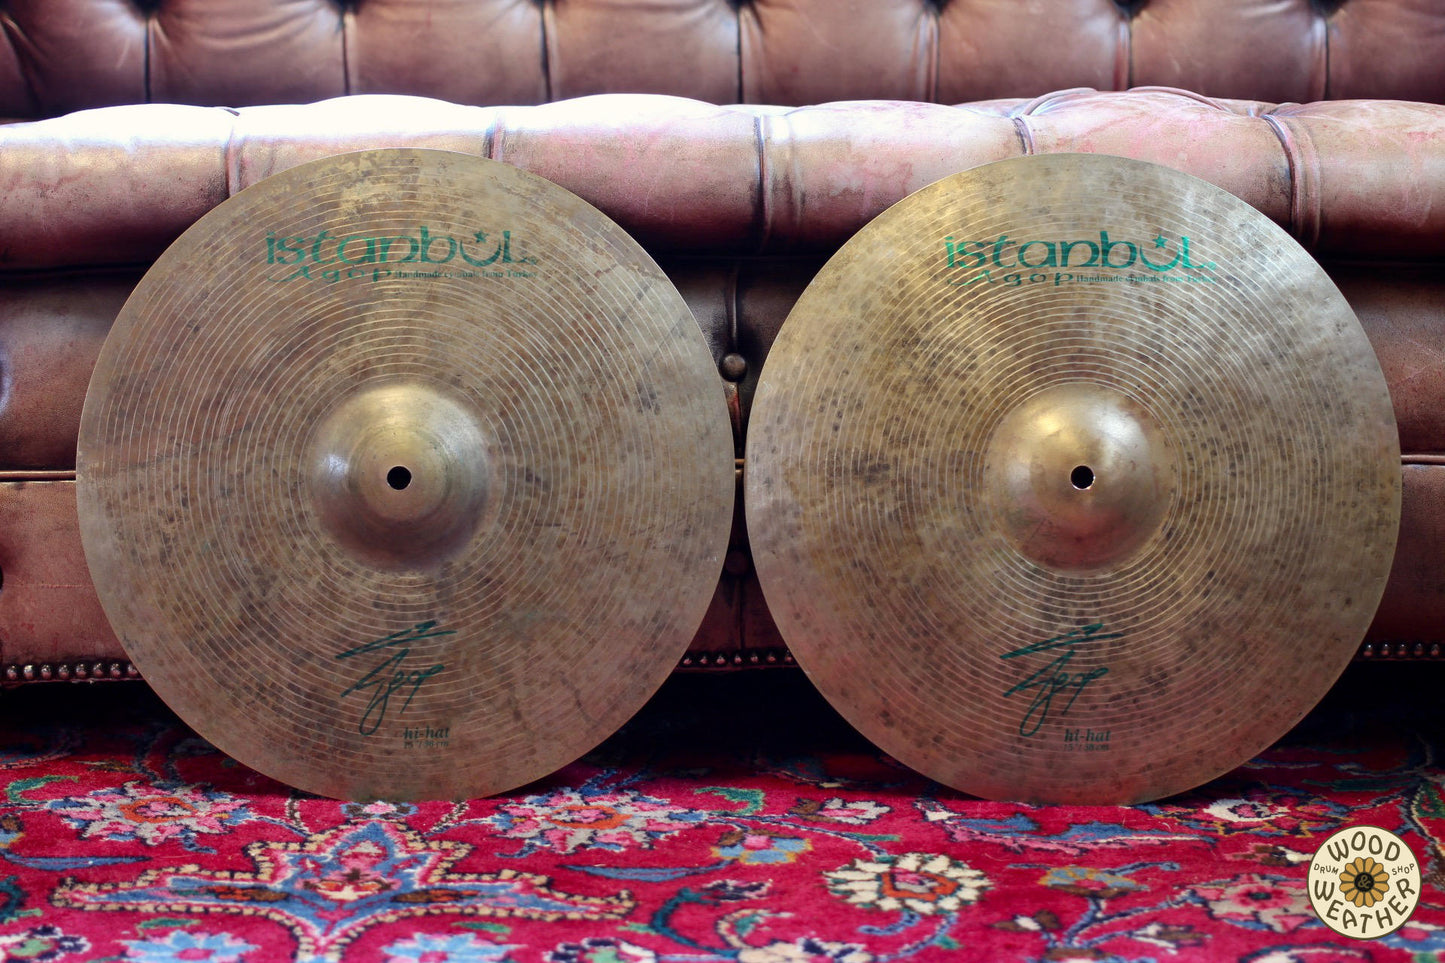 USED Istanbul Agop 15" Signature Hi-Hat Cymbals 995/1200g